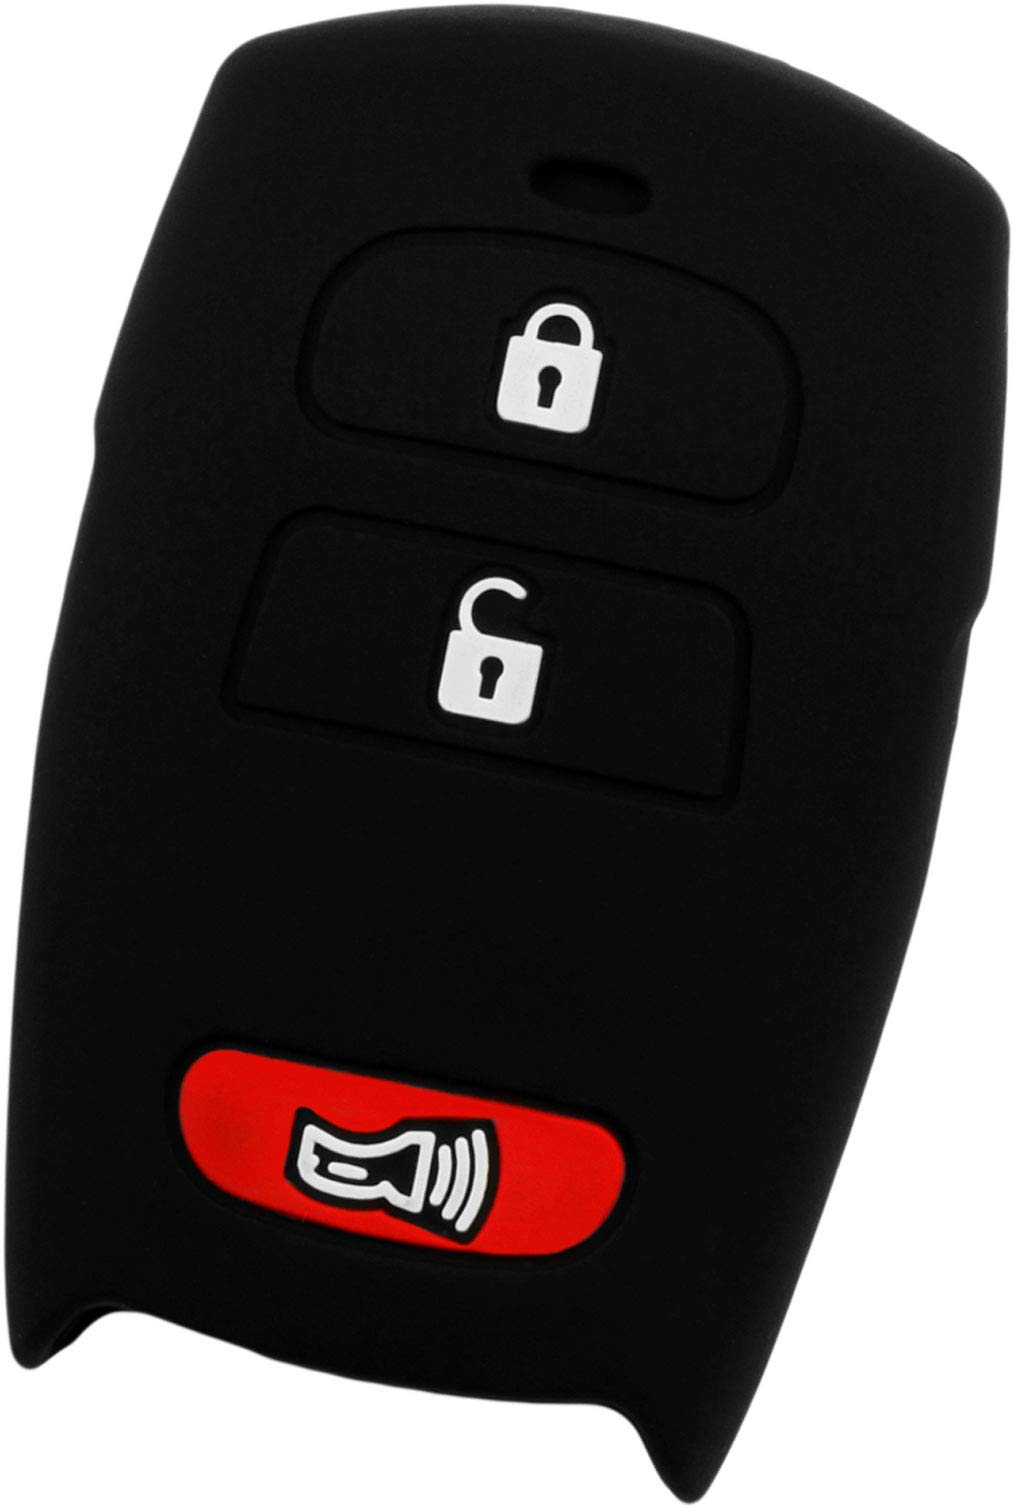 KeyGuardz Keyless Entry Remote Car Key Fob Outer Shell Cover Soft Rubber Case for Kia Sedona Hyundai Entourage